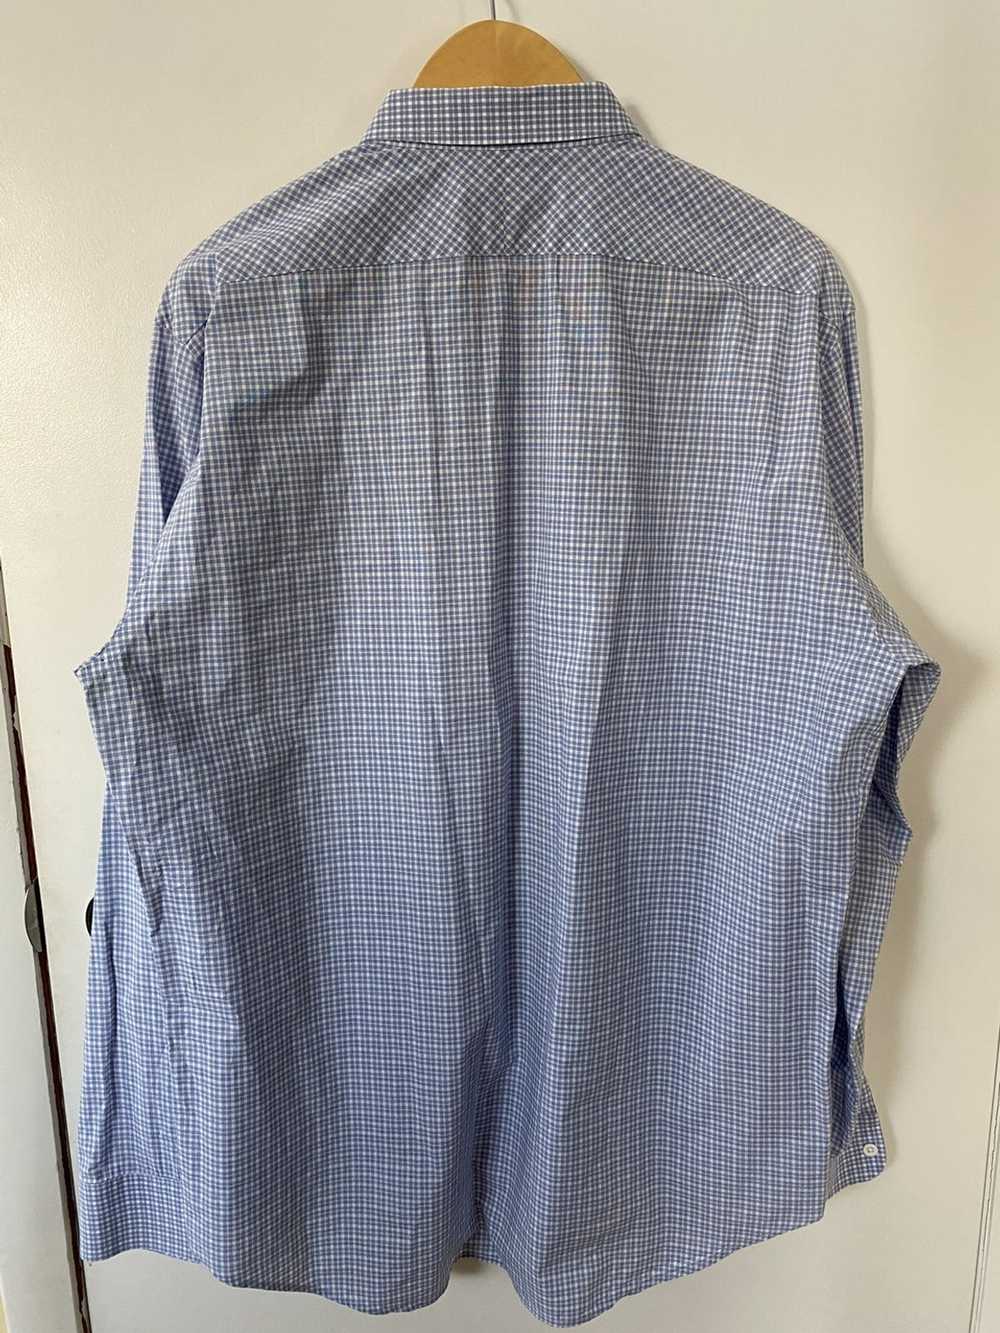 Billy Reid Light Blue Check Shirt - image 2